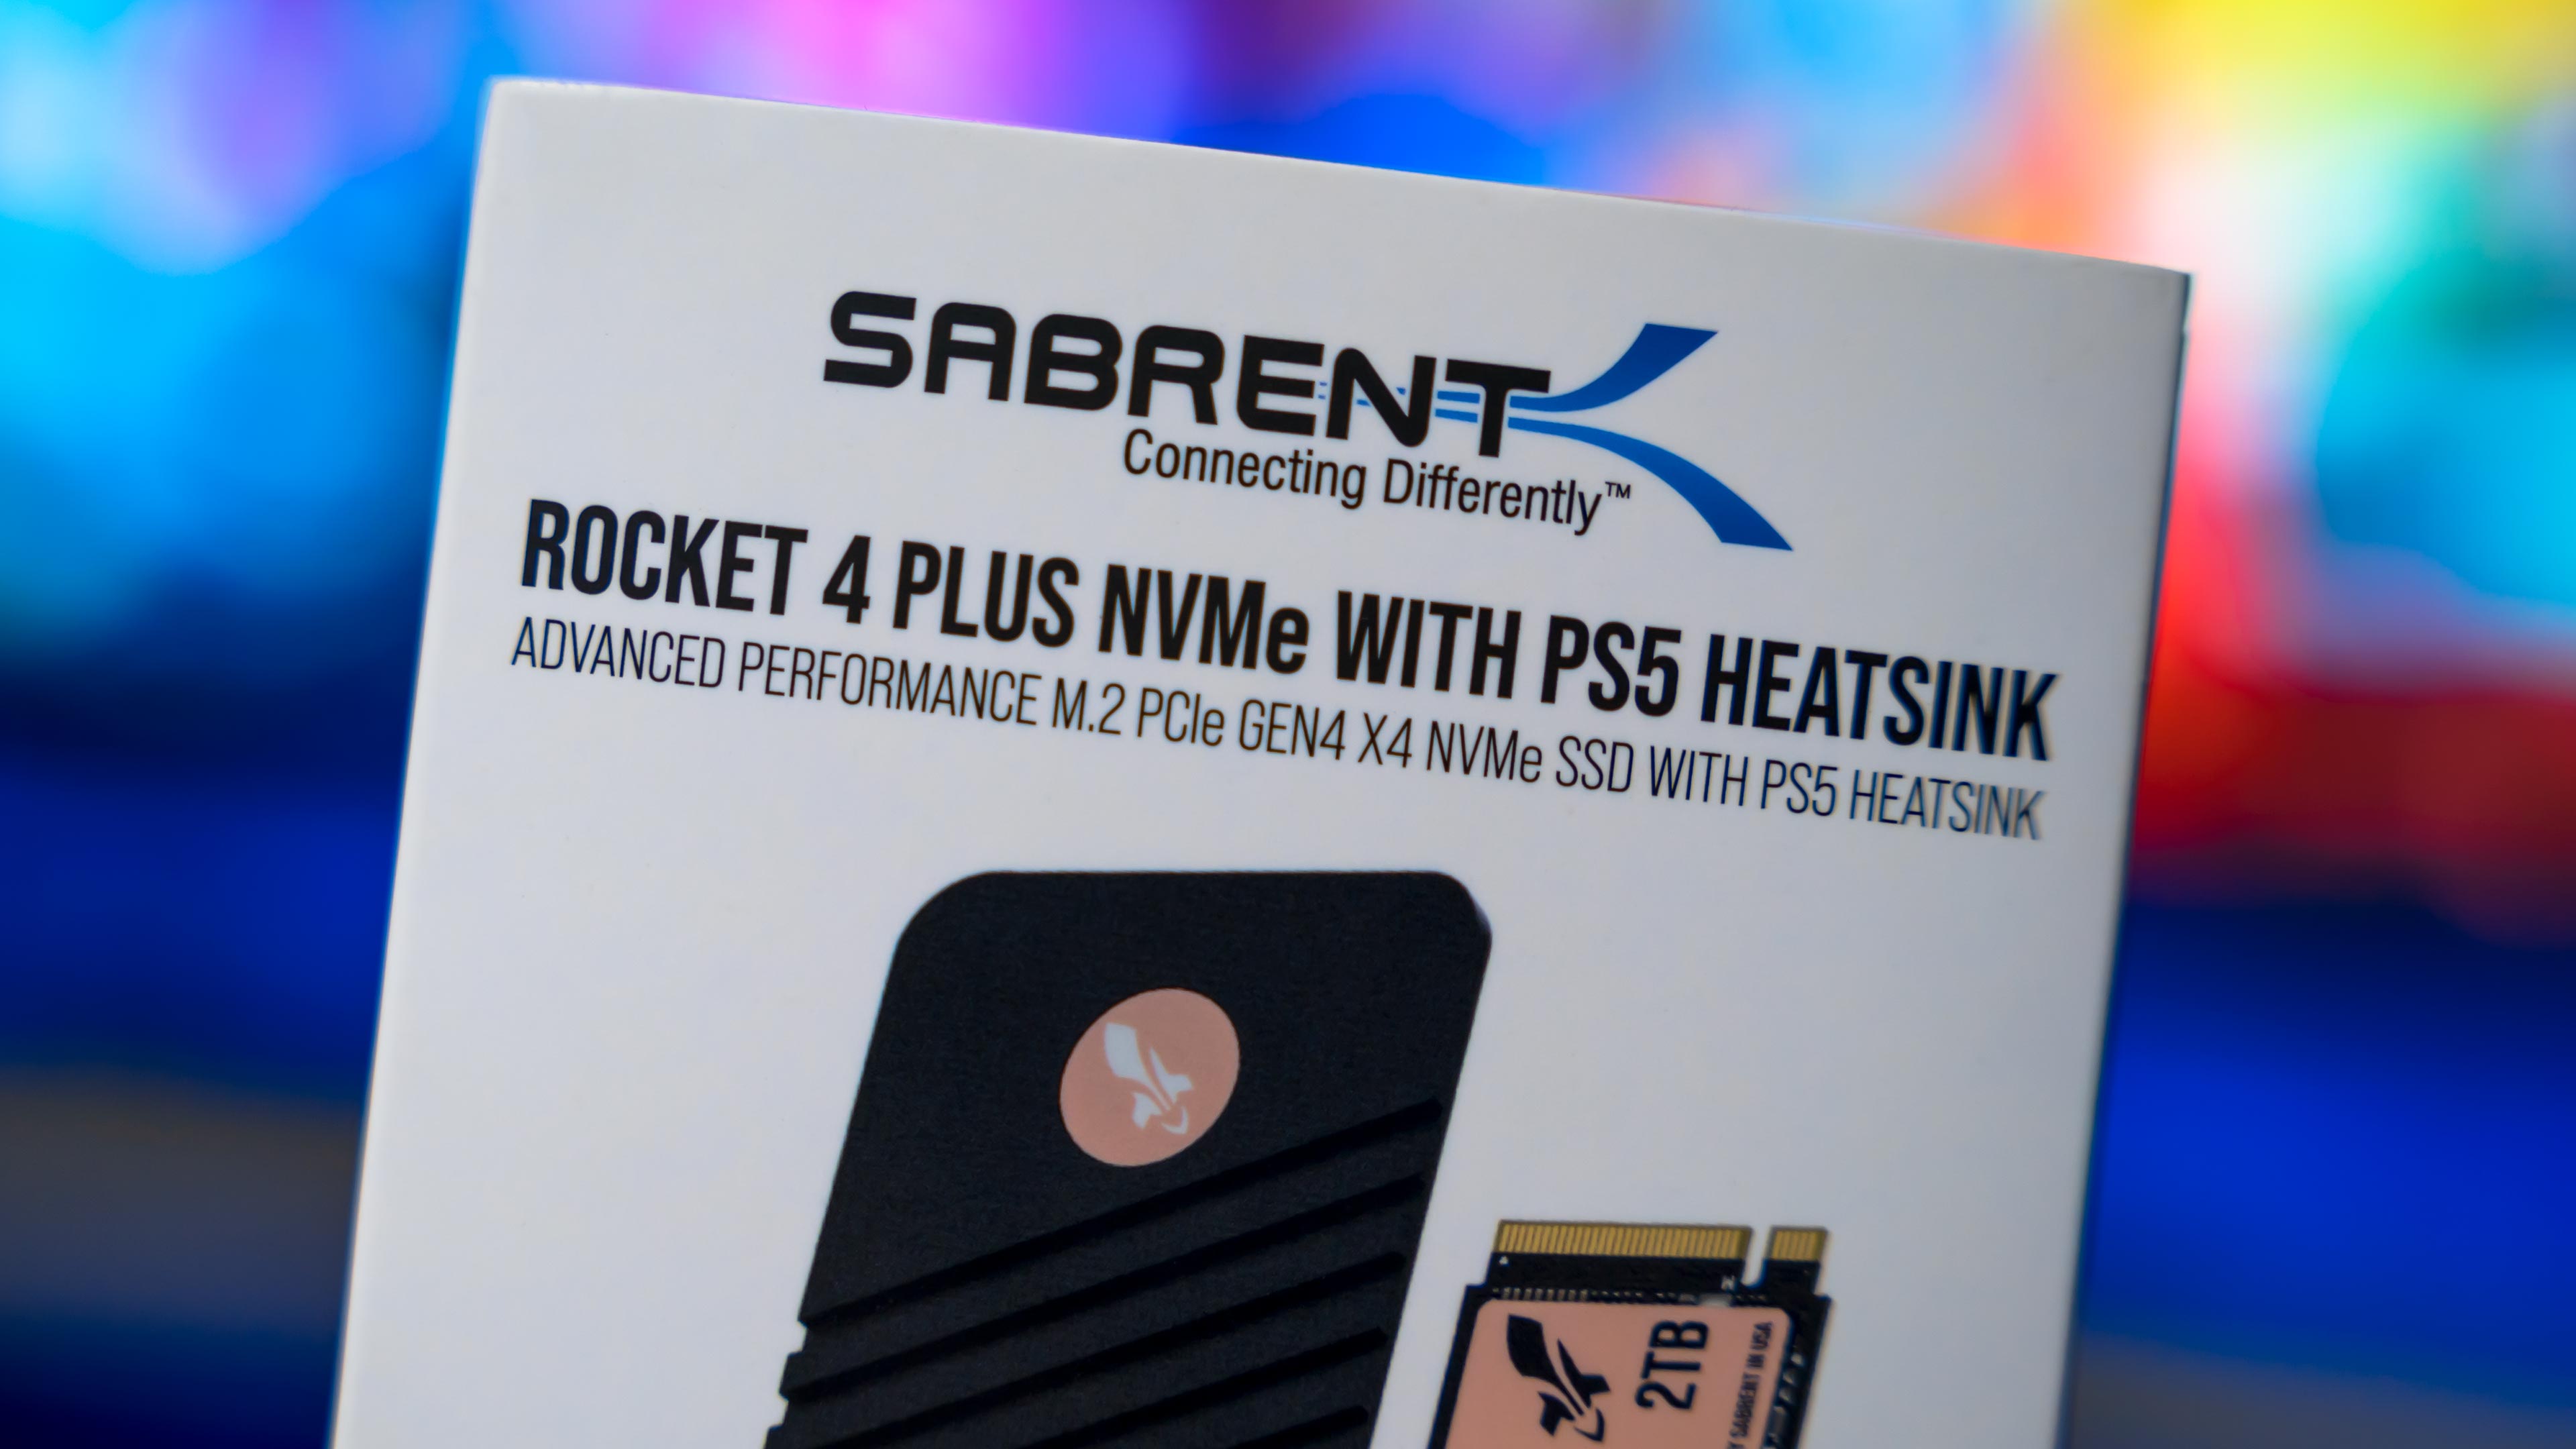 Sabrent Rocket 4 Plus PS5 Heatsink Box (2)